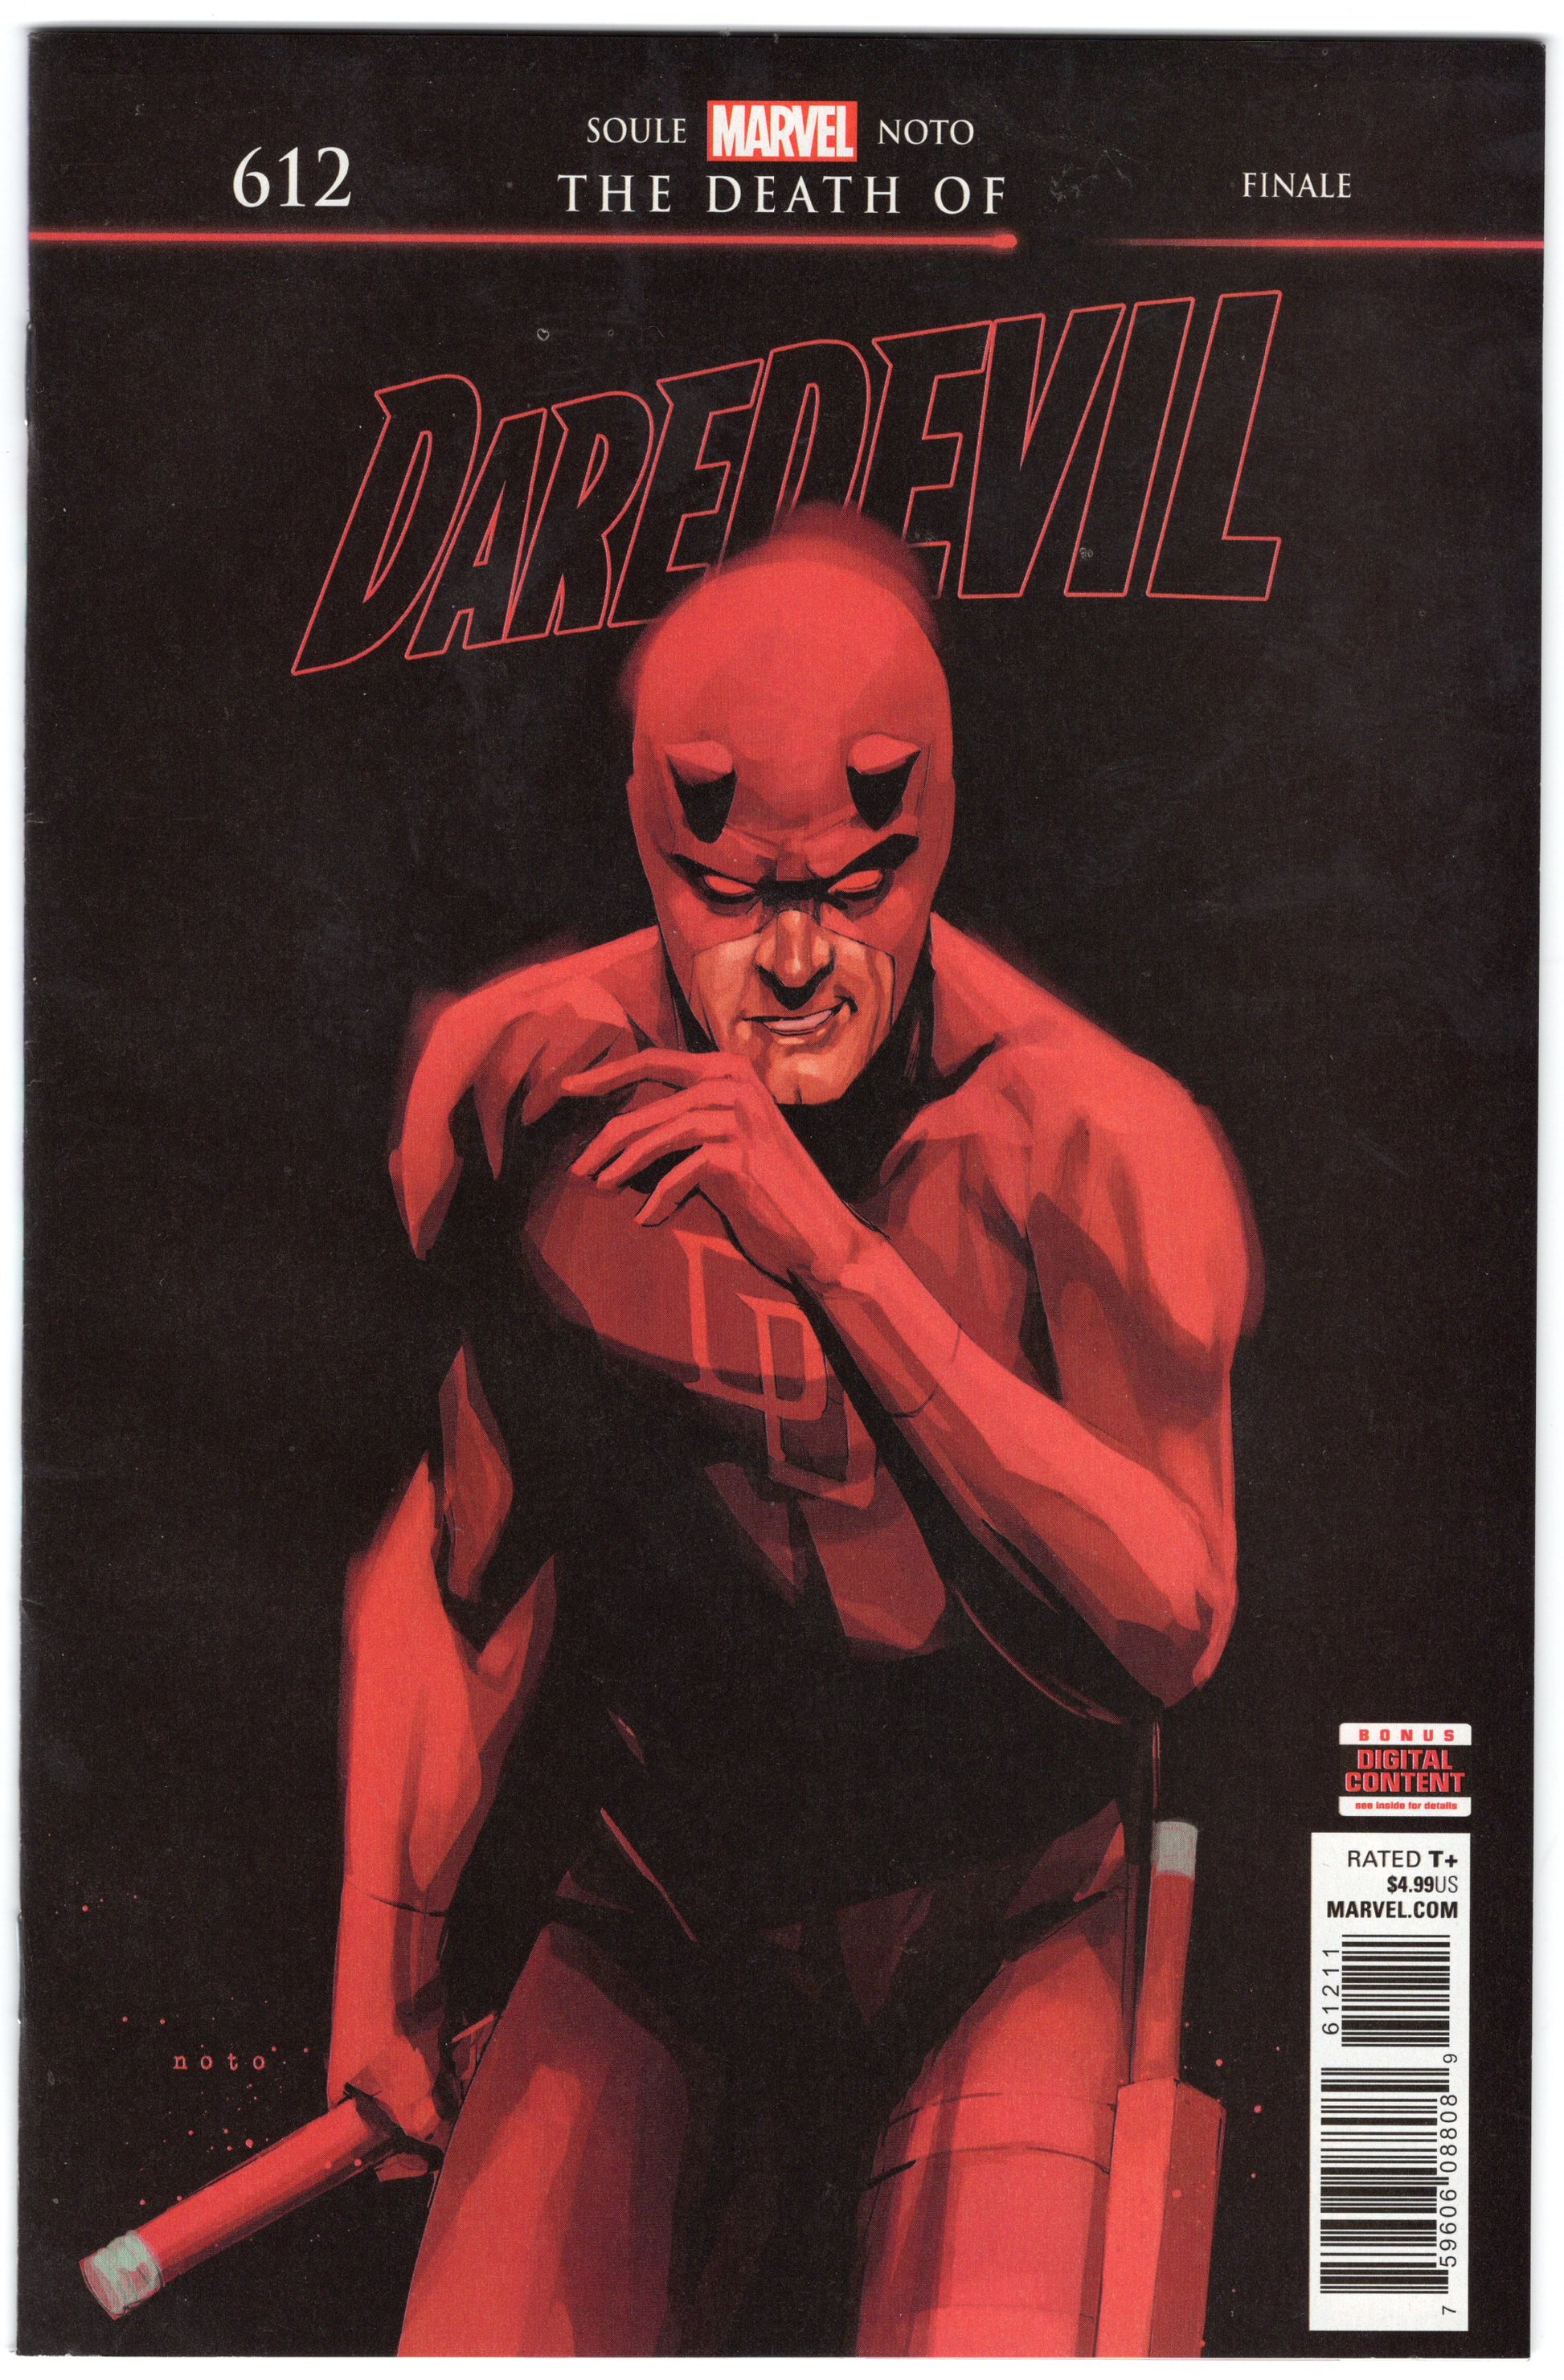 Daredevil - Issue #612 "The Death of Daredevil" (Jan. 2019 - Marvel Comics) NM-